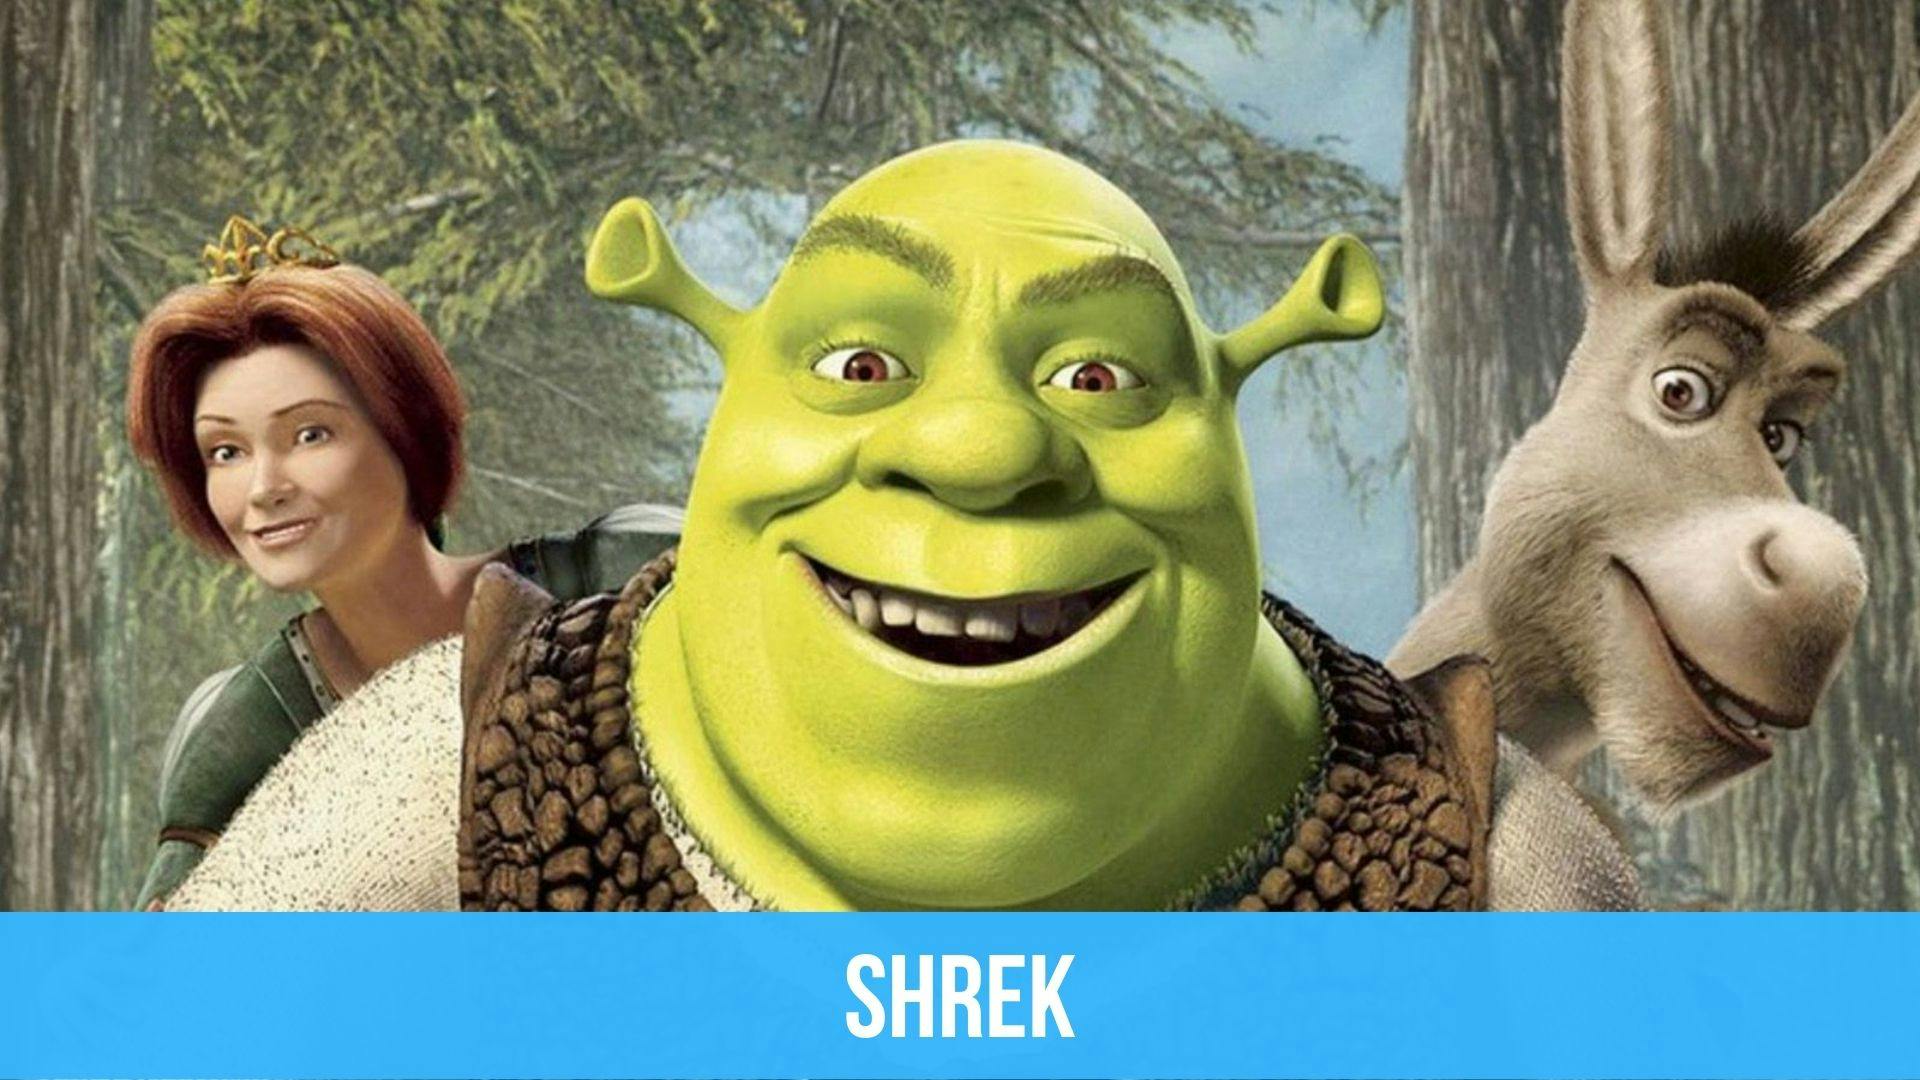 poster des personnages du film d’animation Shrek